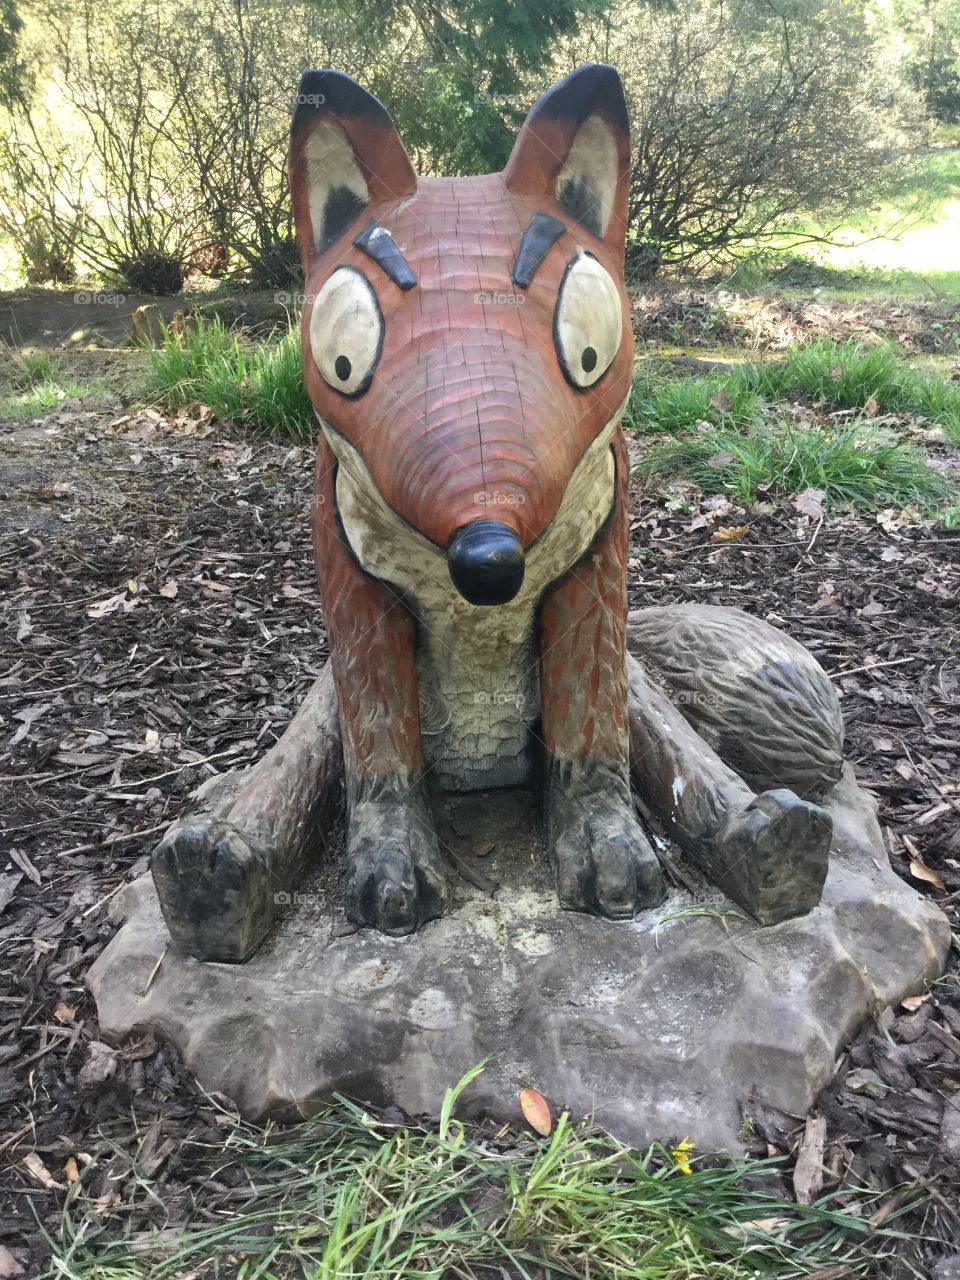 The fox from The Gruffalo, Bedgebury Pinetum